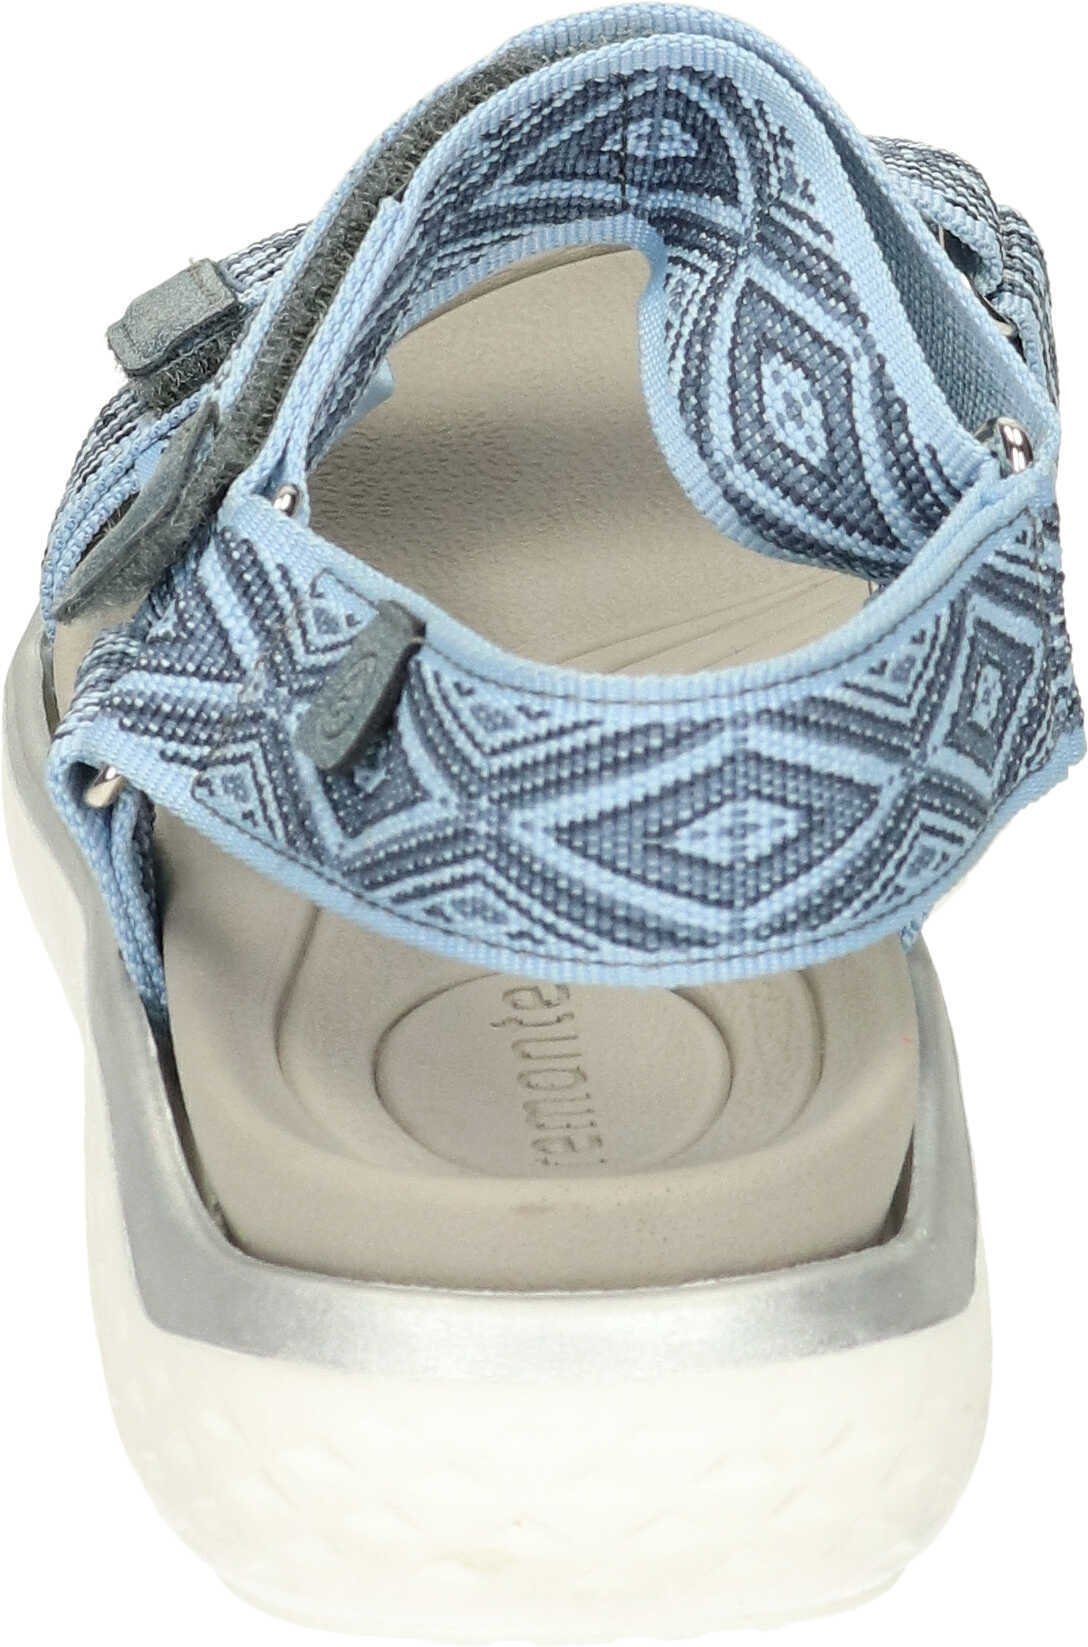 Remonte Sandaletten Sandalette Textil aus